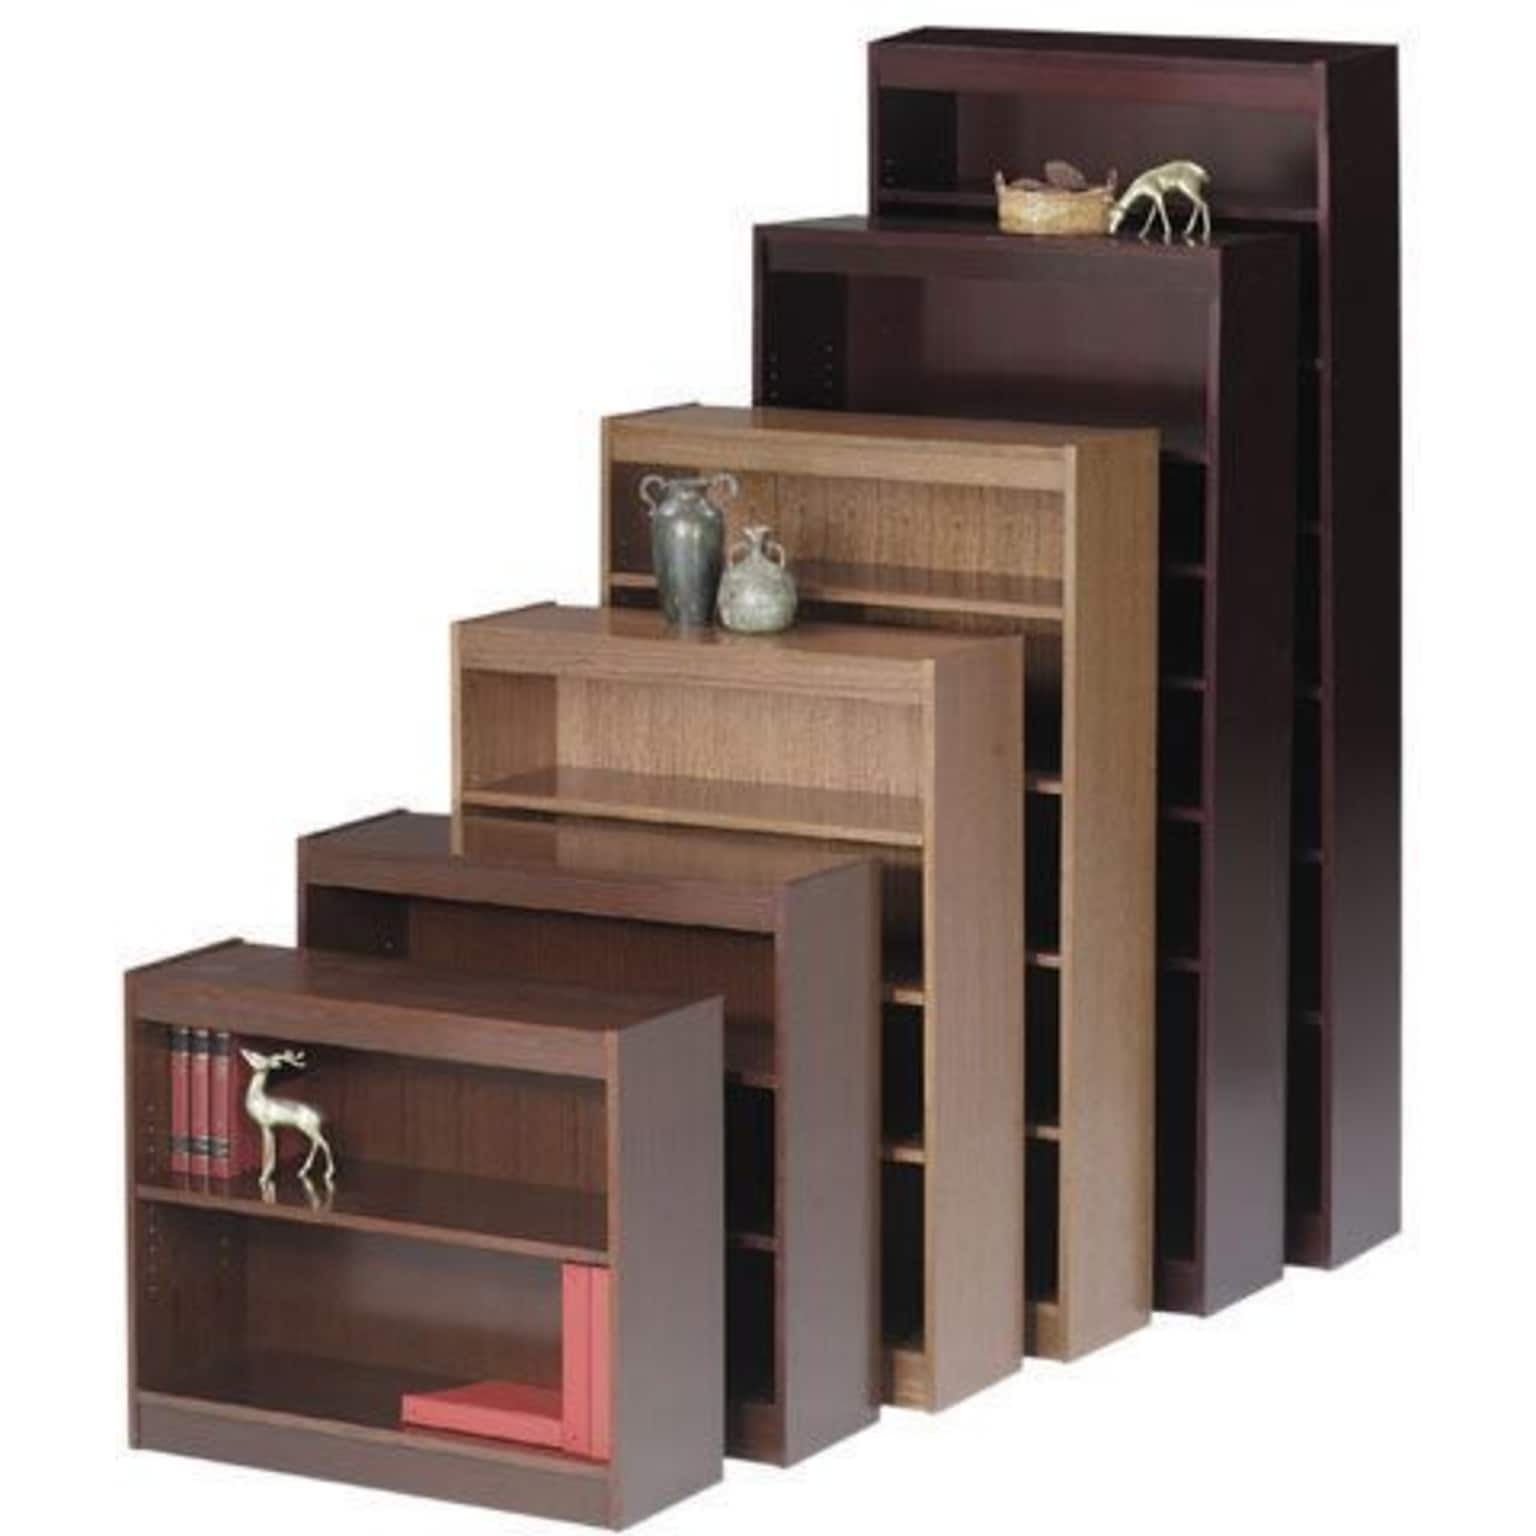 LLR Veneer Panel Bookcase, Mahogany, 5-Shelf, 72H x 36W x 12D